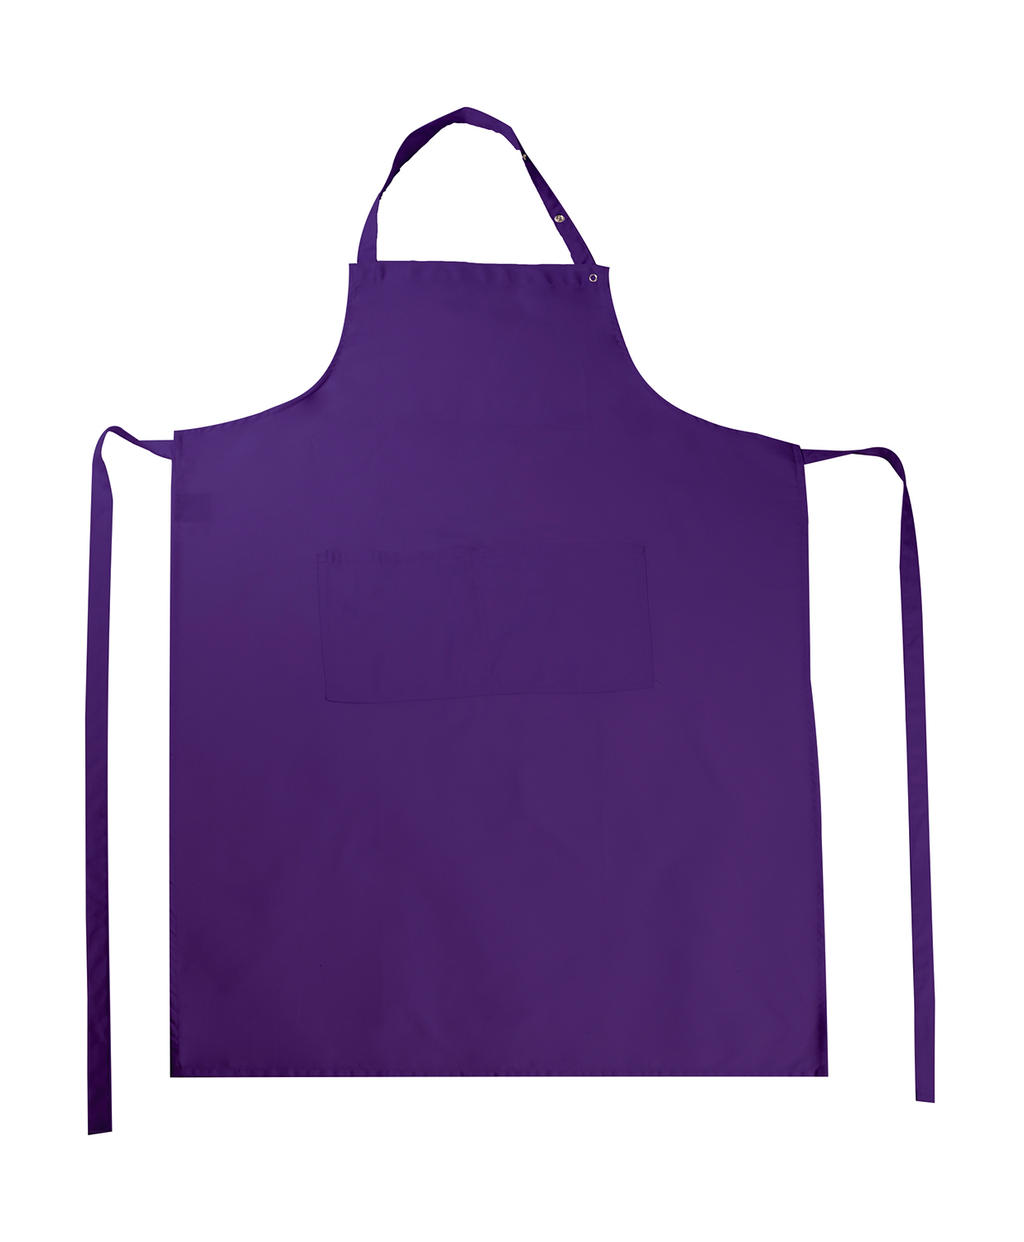  Amsterdam Bib Apron with Pocket in Farbe Purple